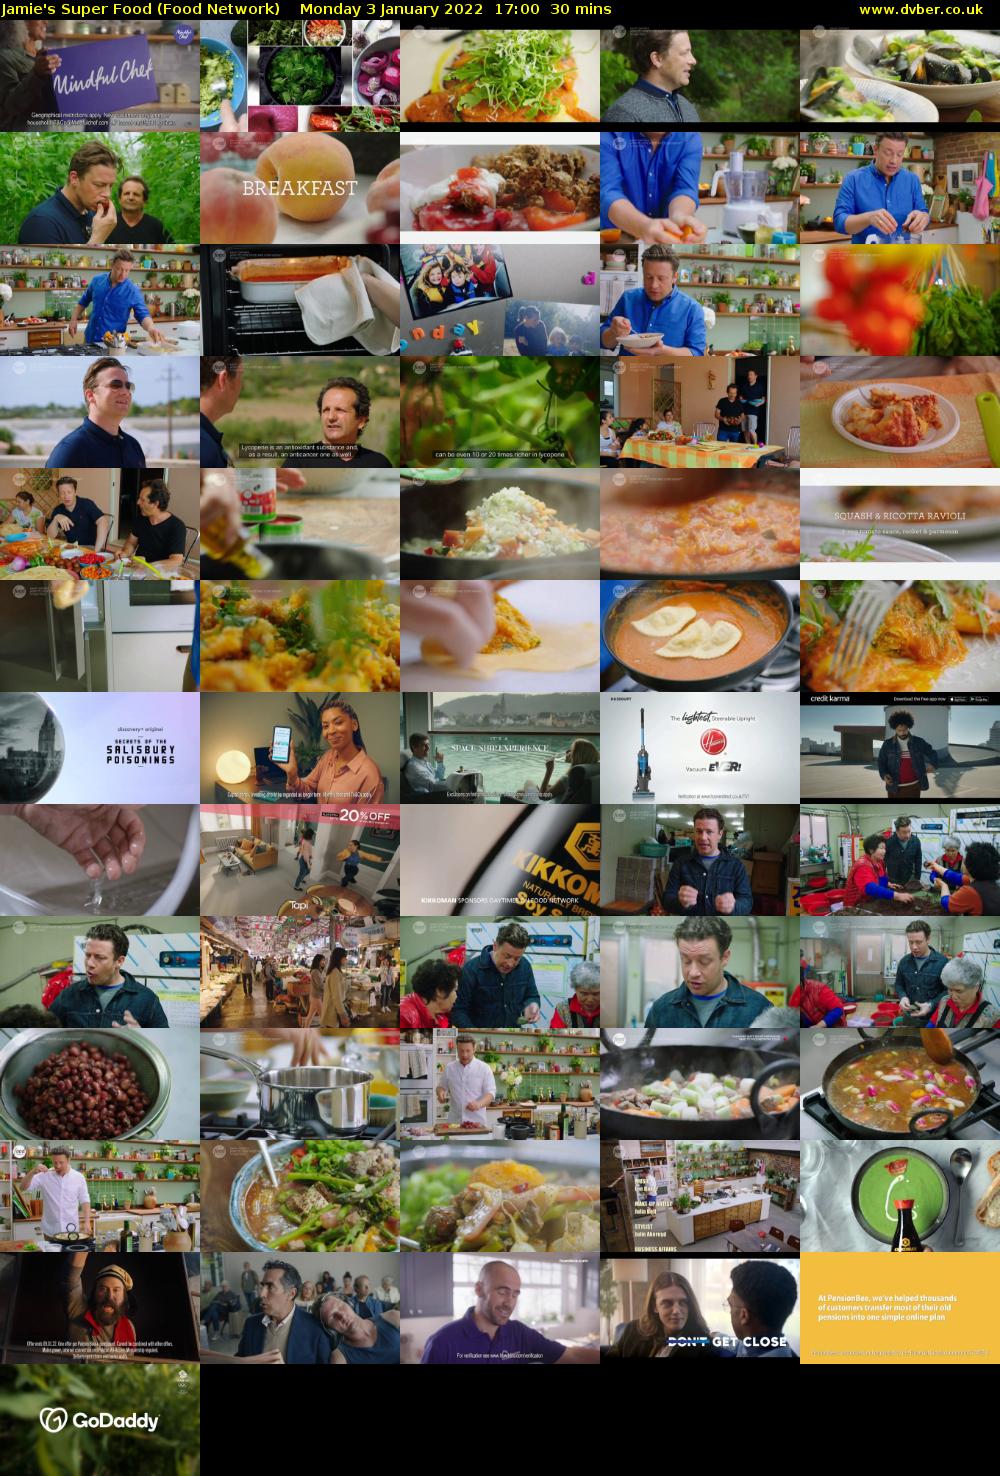 Jamie's Super Food (Food Network) Monday 3 January 2022 17:00 - 17:30